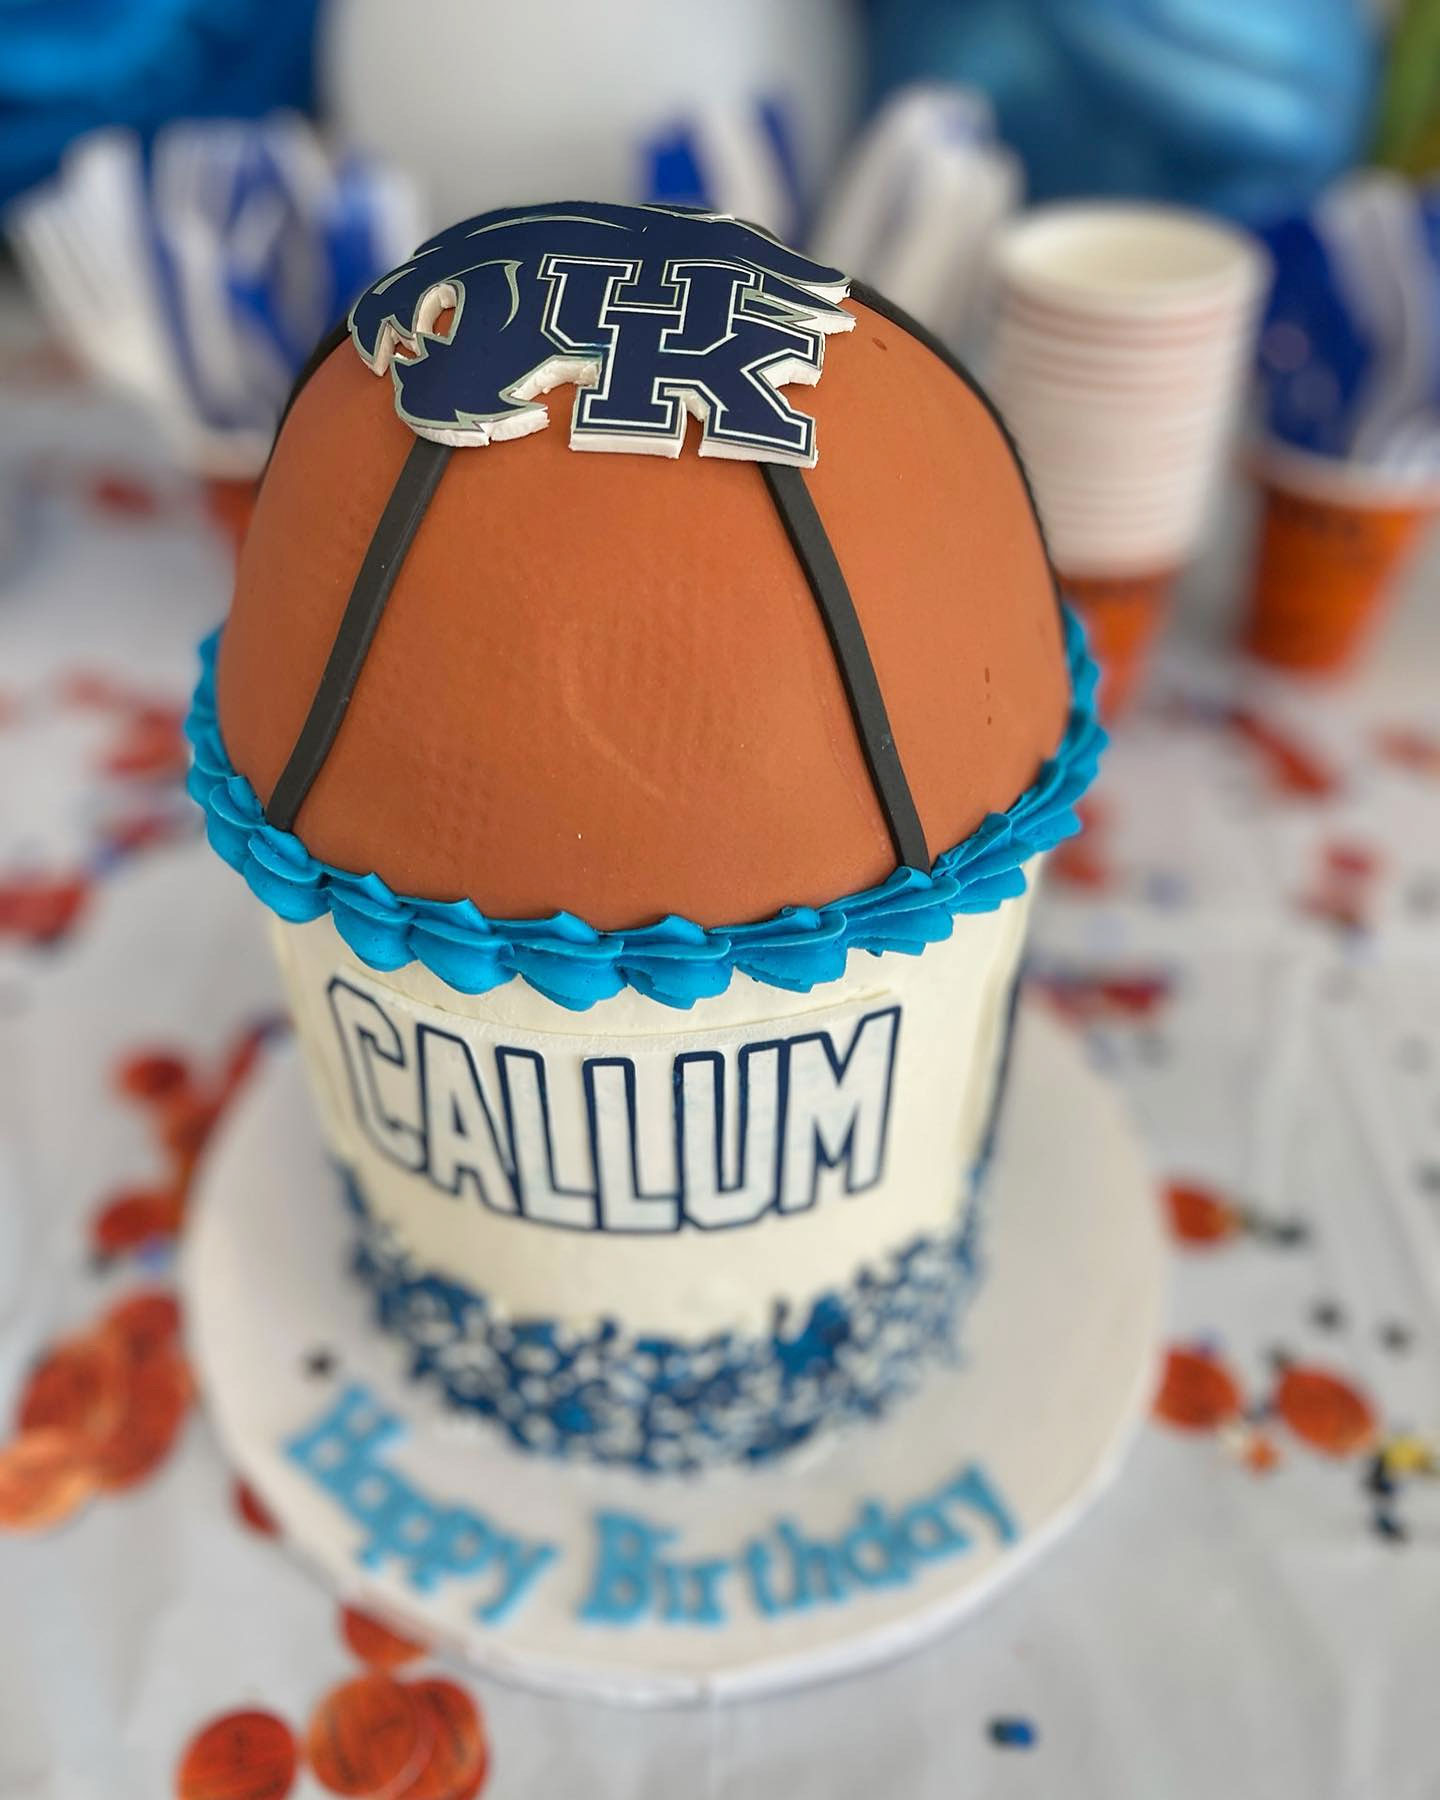 Jenna Dewan Steve Kazee Celebrate Son Callum 2nd Birthday With Basketball Themed Party